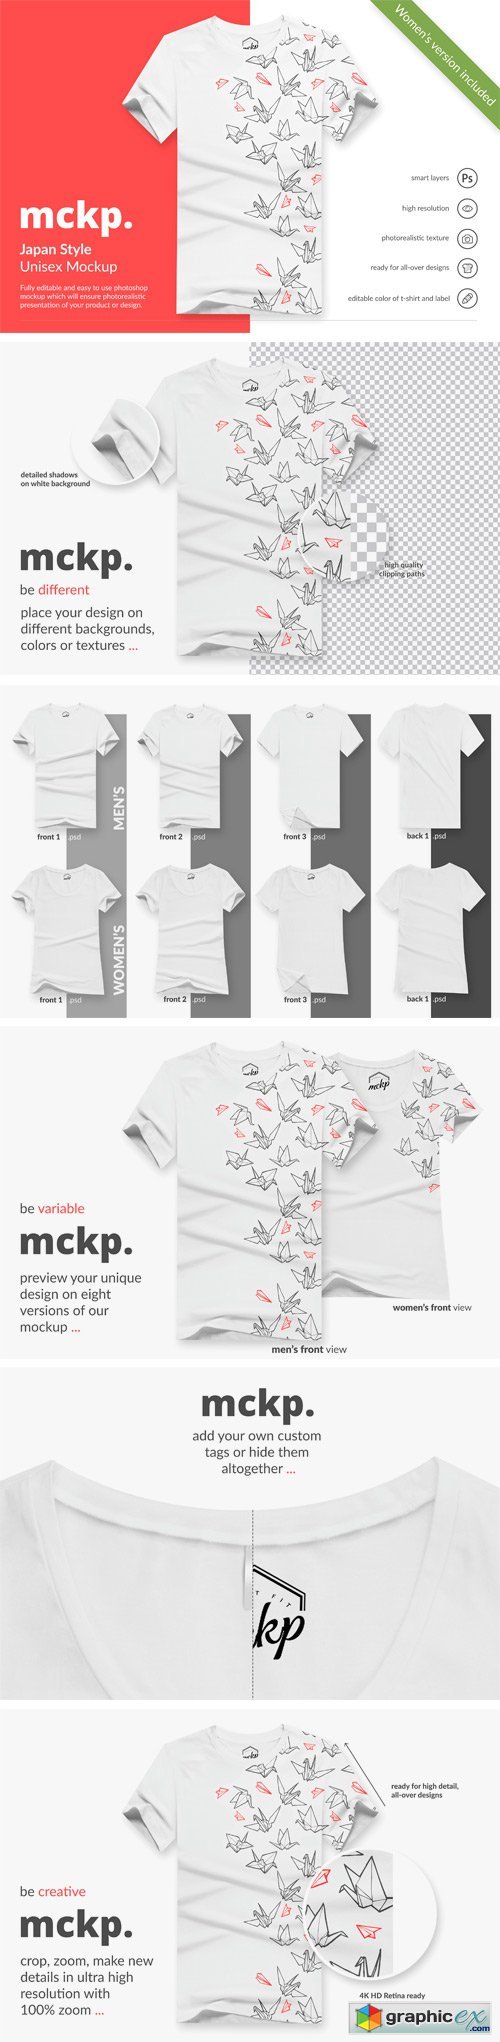 Japan Style by mckp - Tshirt Mockups